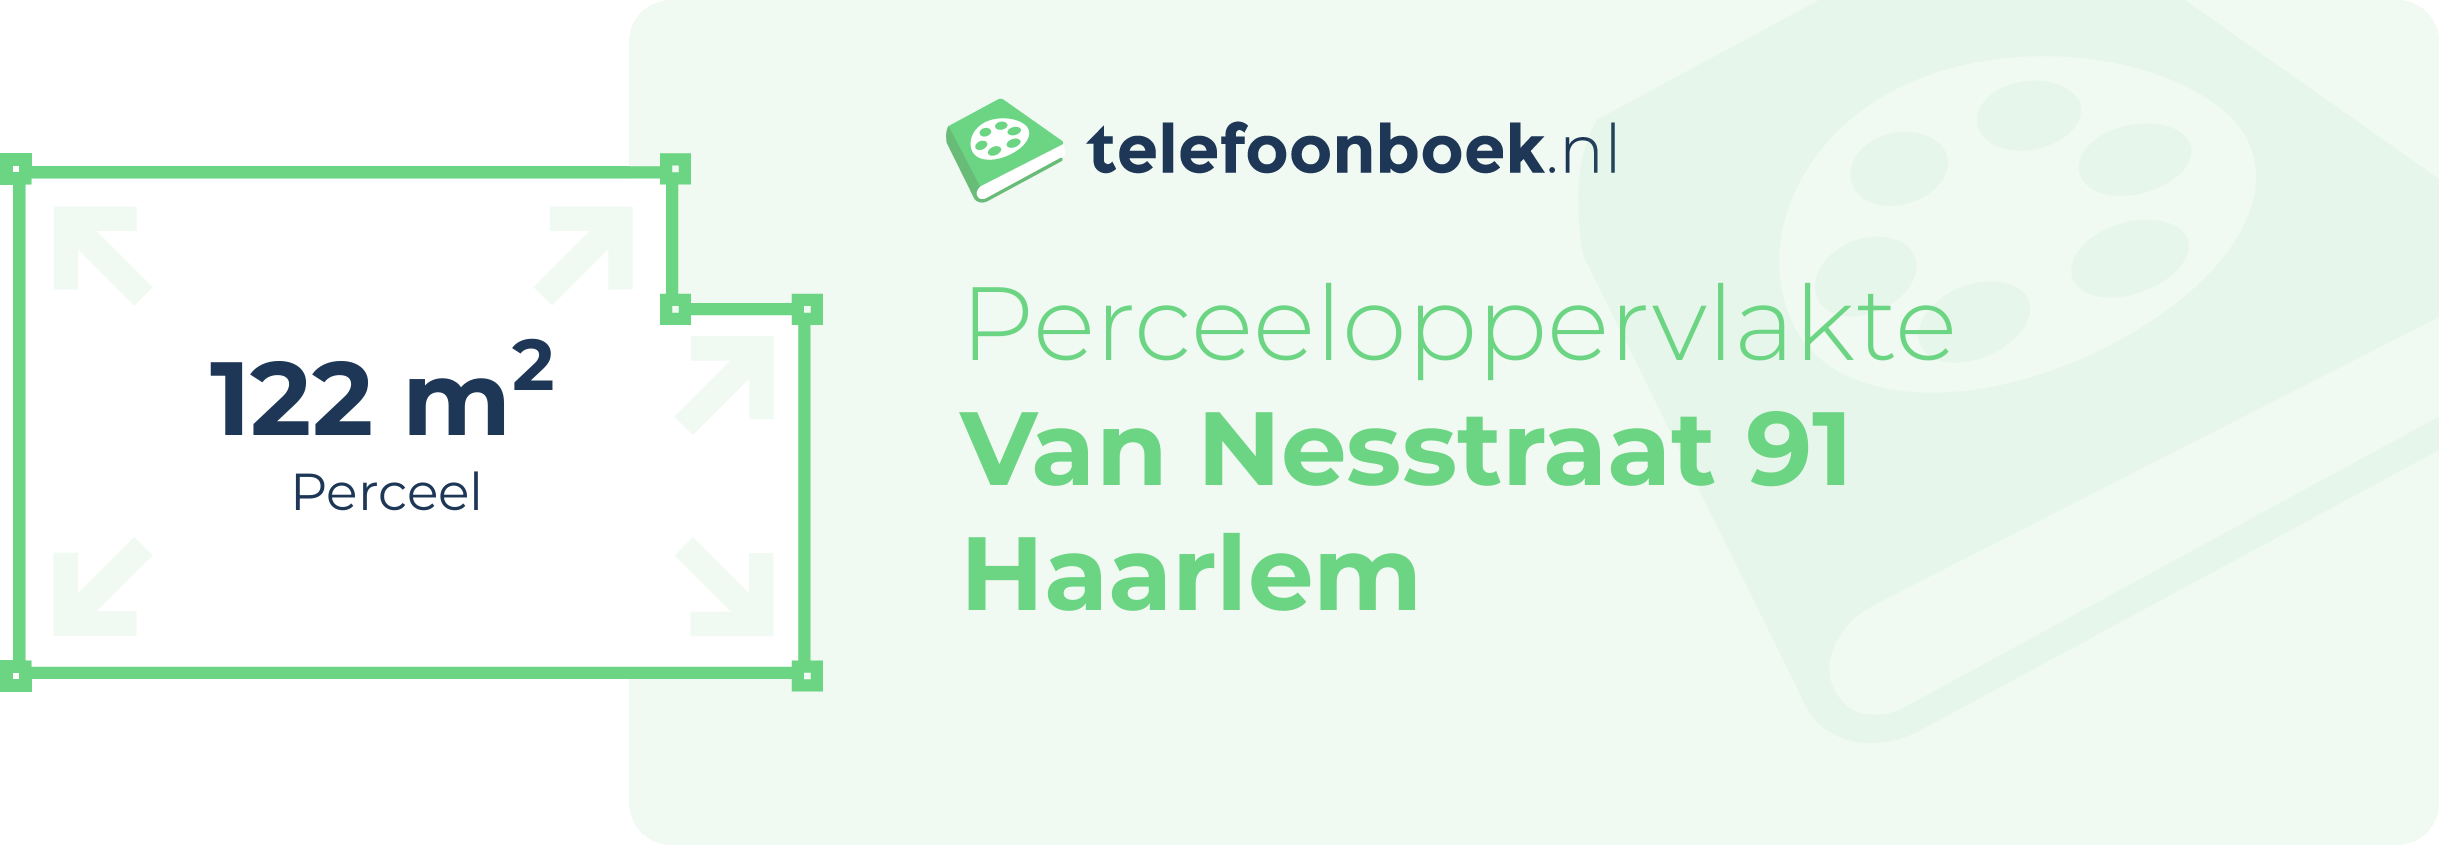 Perceeloppervlakte Van Nesstraat 91 Haarlem